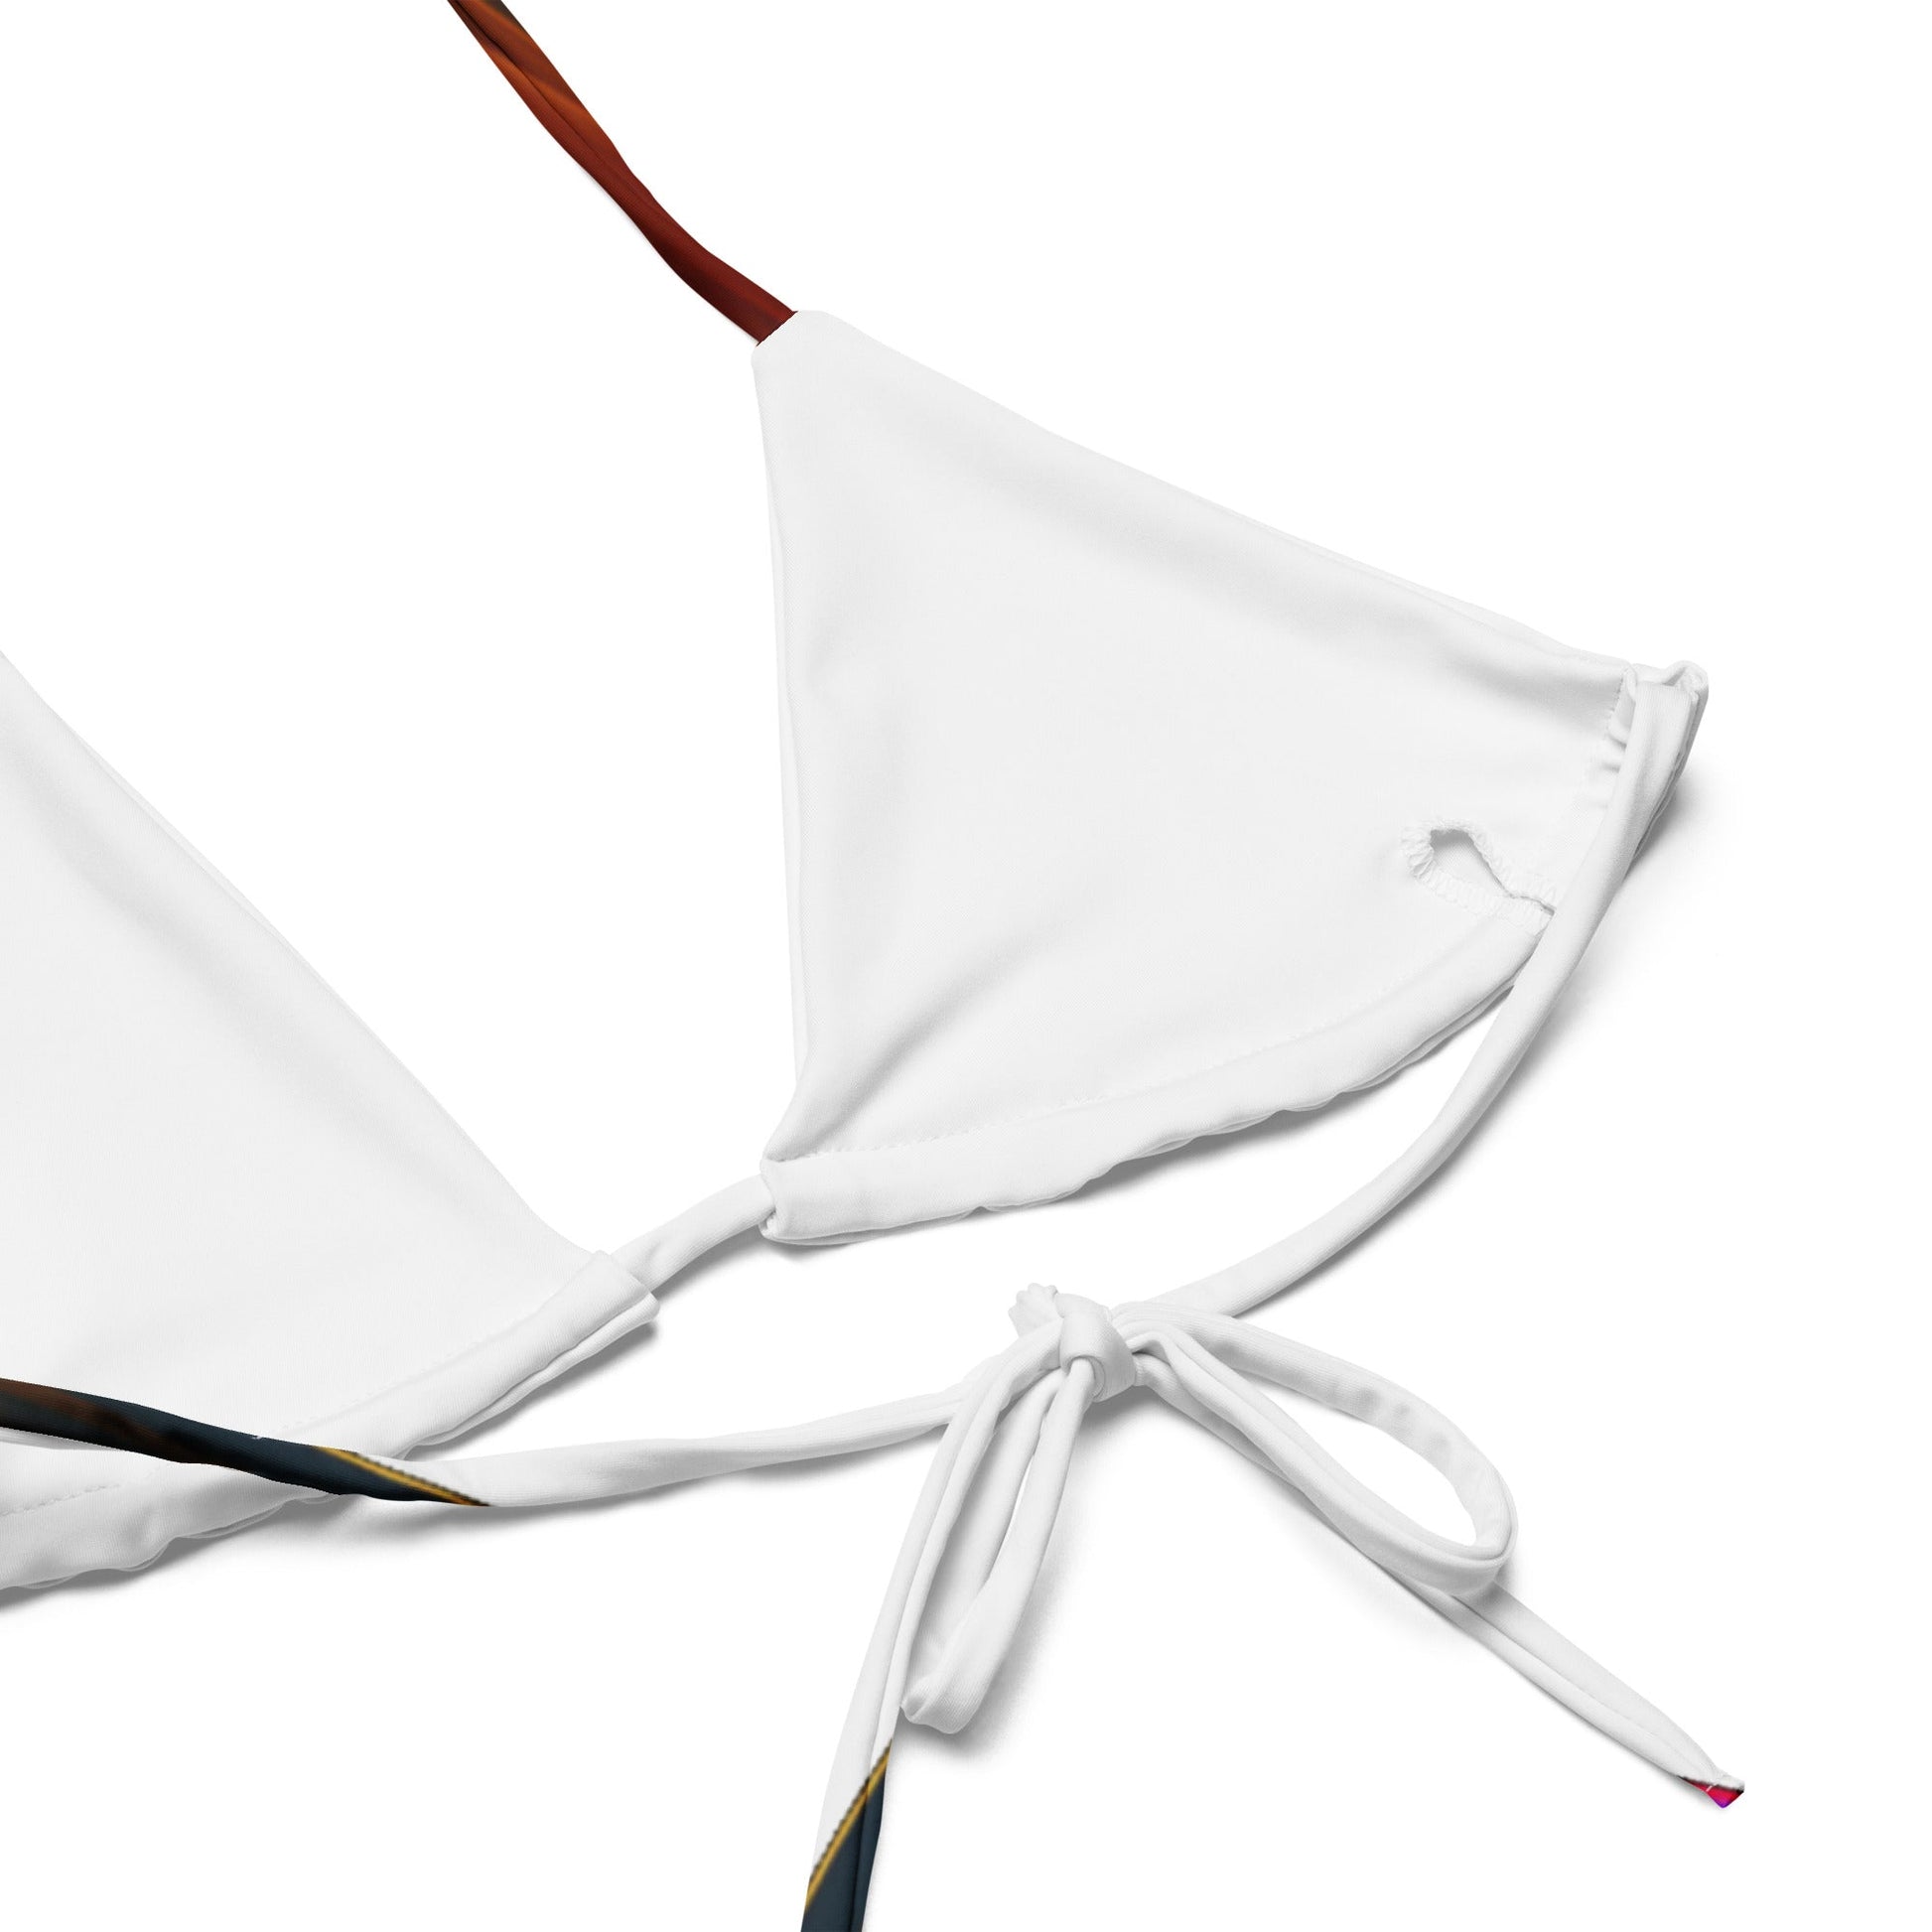 11 Recycled string bikini top by Neduz Designs